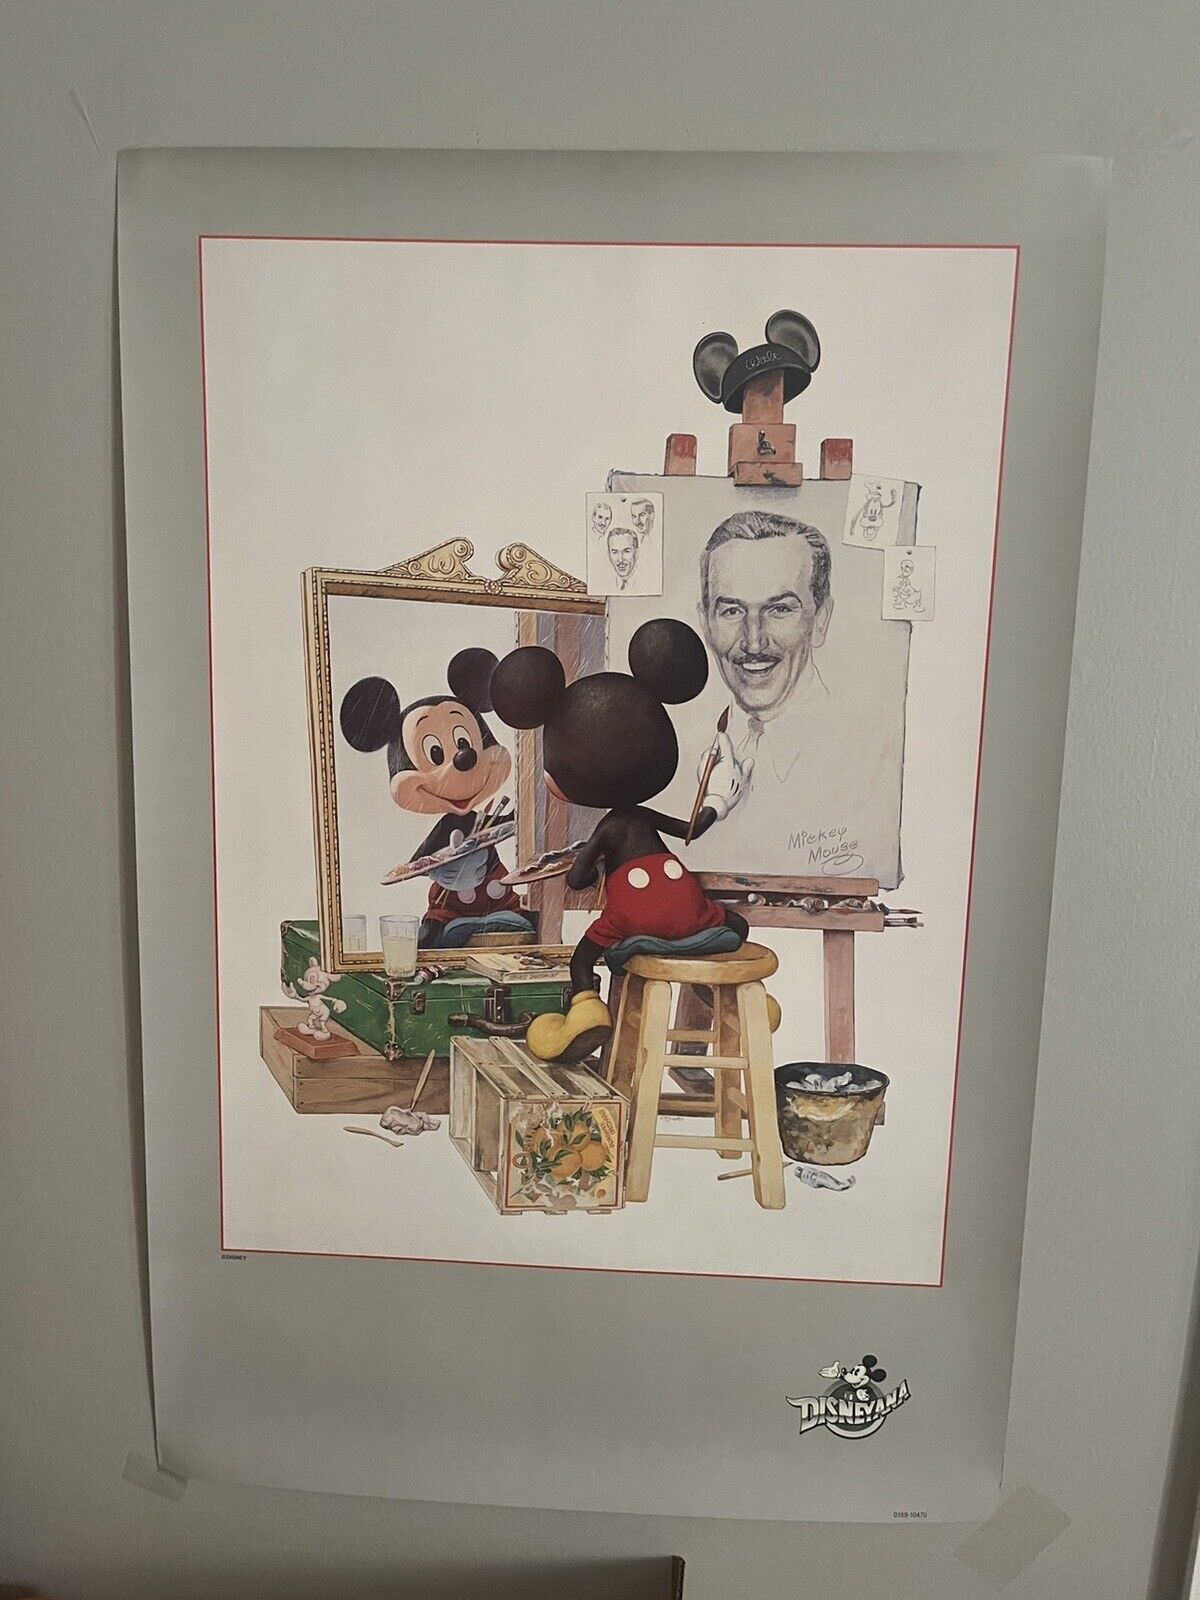 Disneyana Disney Art Print Poster 36x24 Walt Disney Self Portrait Mickey Mouse